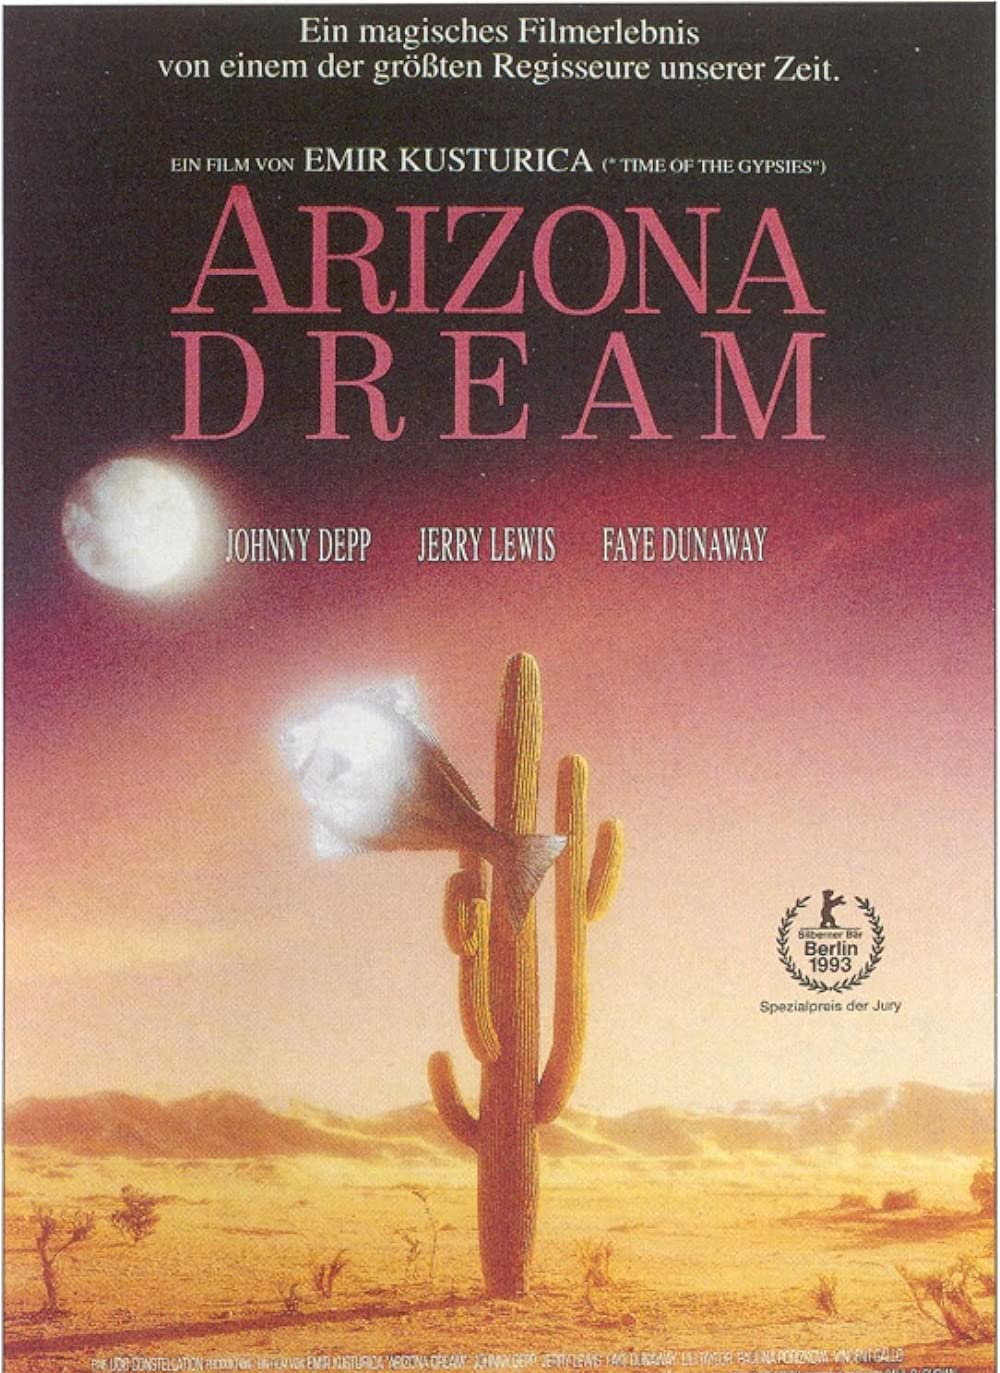 Filmbeschreibung zu Arizona Dream